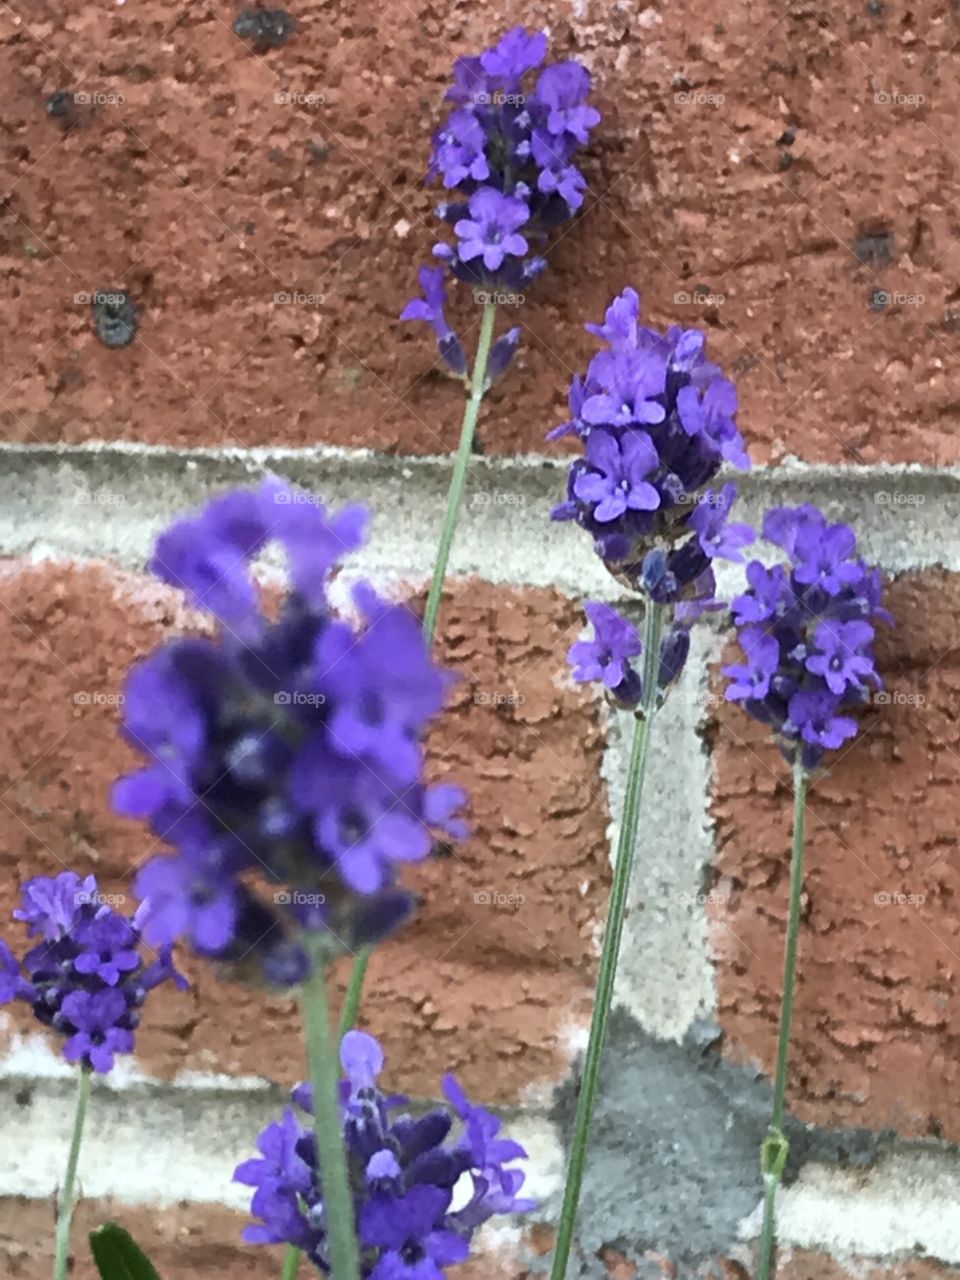 Purple flowers laid against a brick wall.